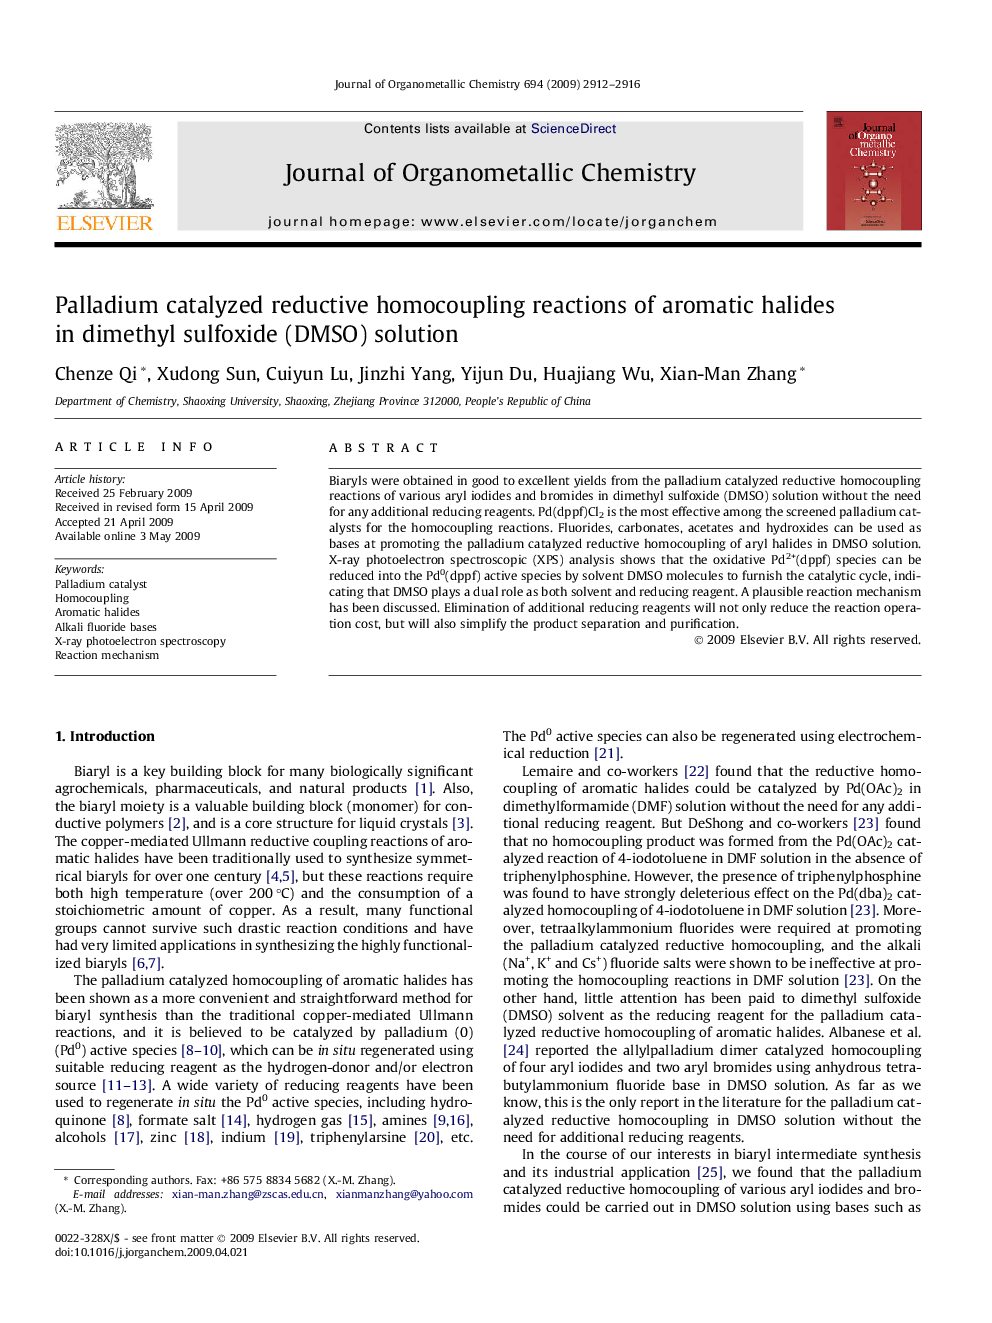 Palladium catalyzed reductive homocoupling reactions of aromatic halides in dimethyl sulfoxide (DMSO) solution